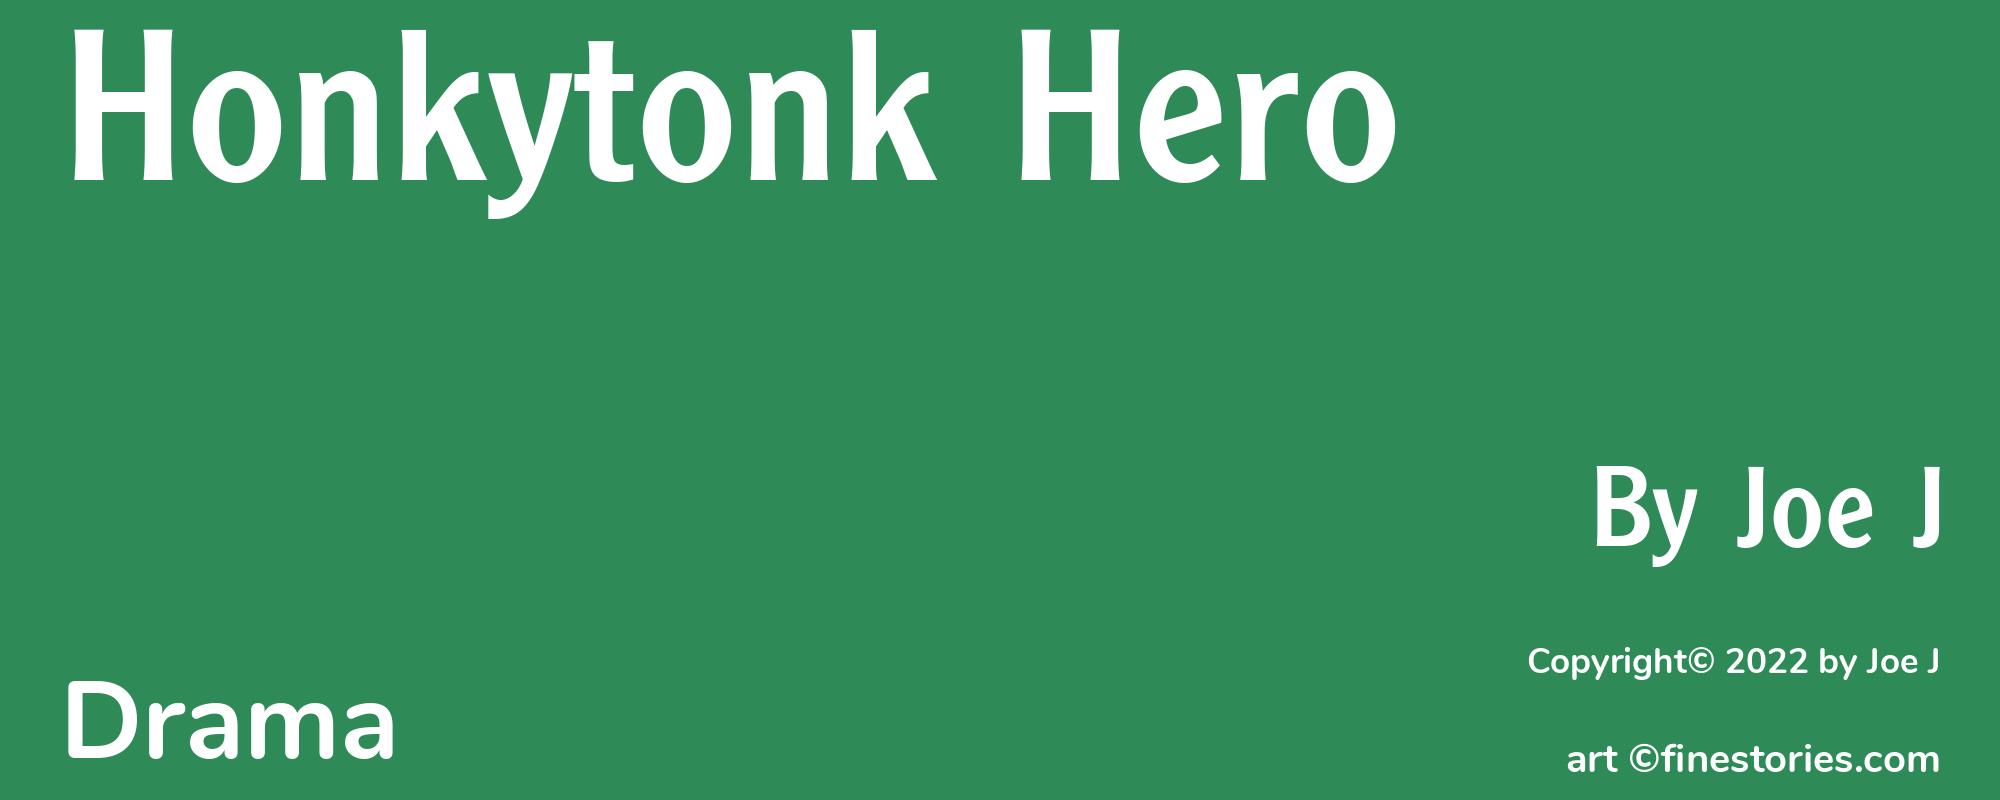 Honkytonk Hero - Cover